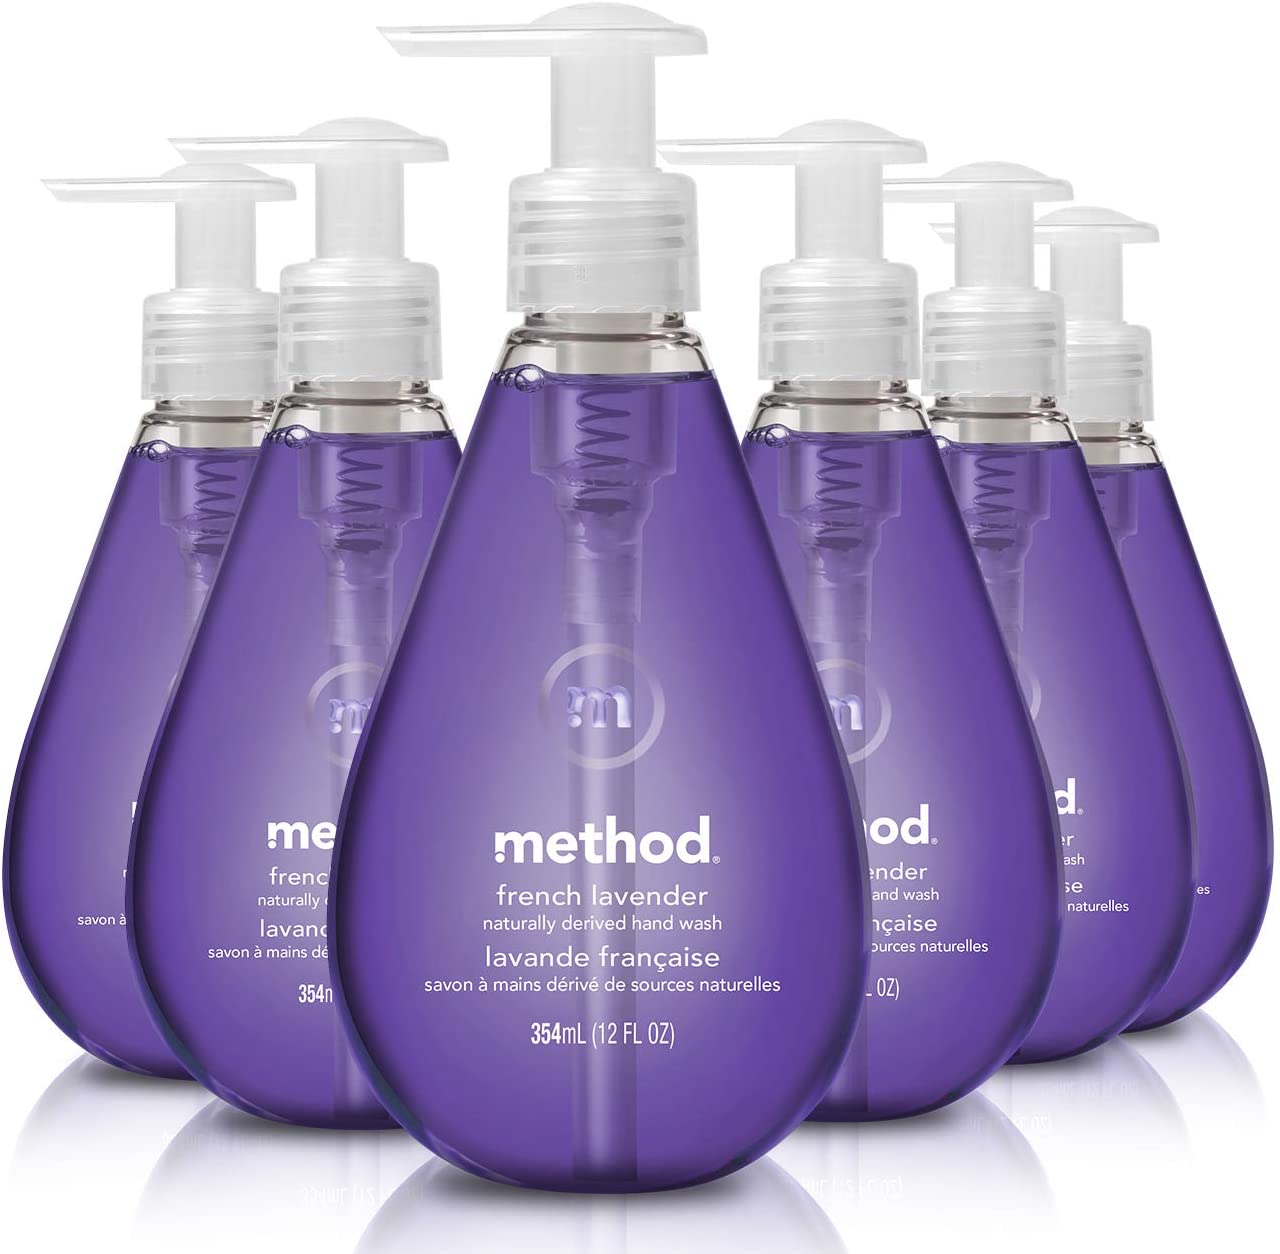 Method Gel Hand Soap, French Lavender, 12 Fl Oz (Pack of 6) $15.51 (REG $30.00)